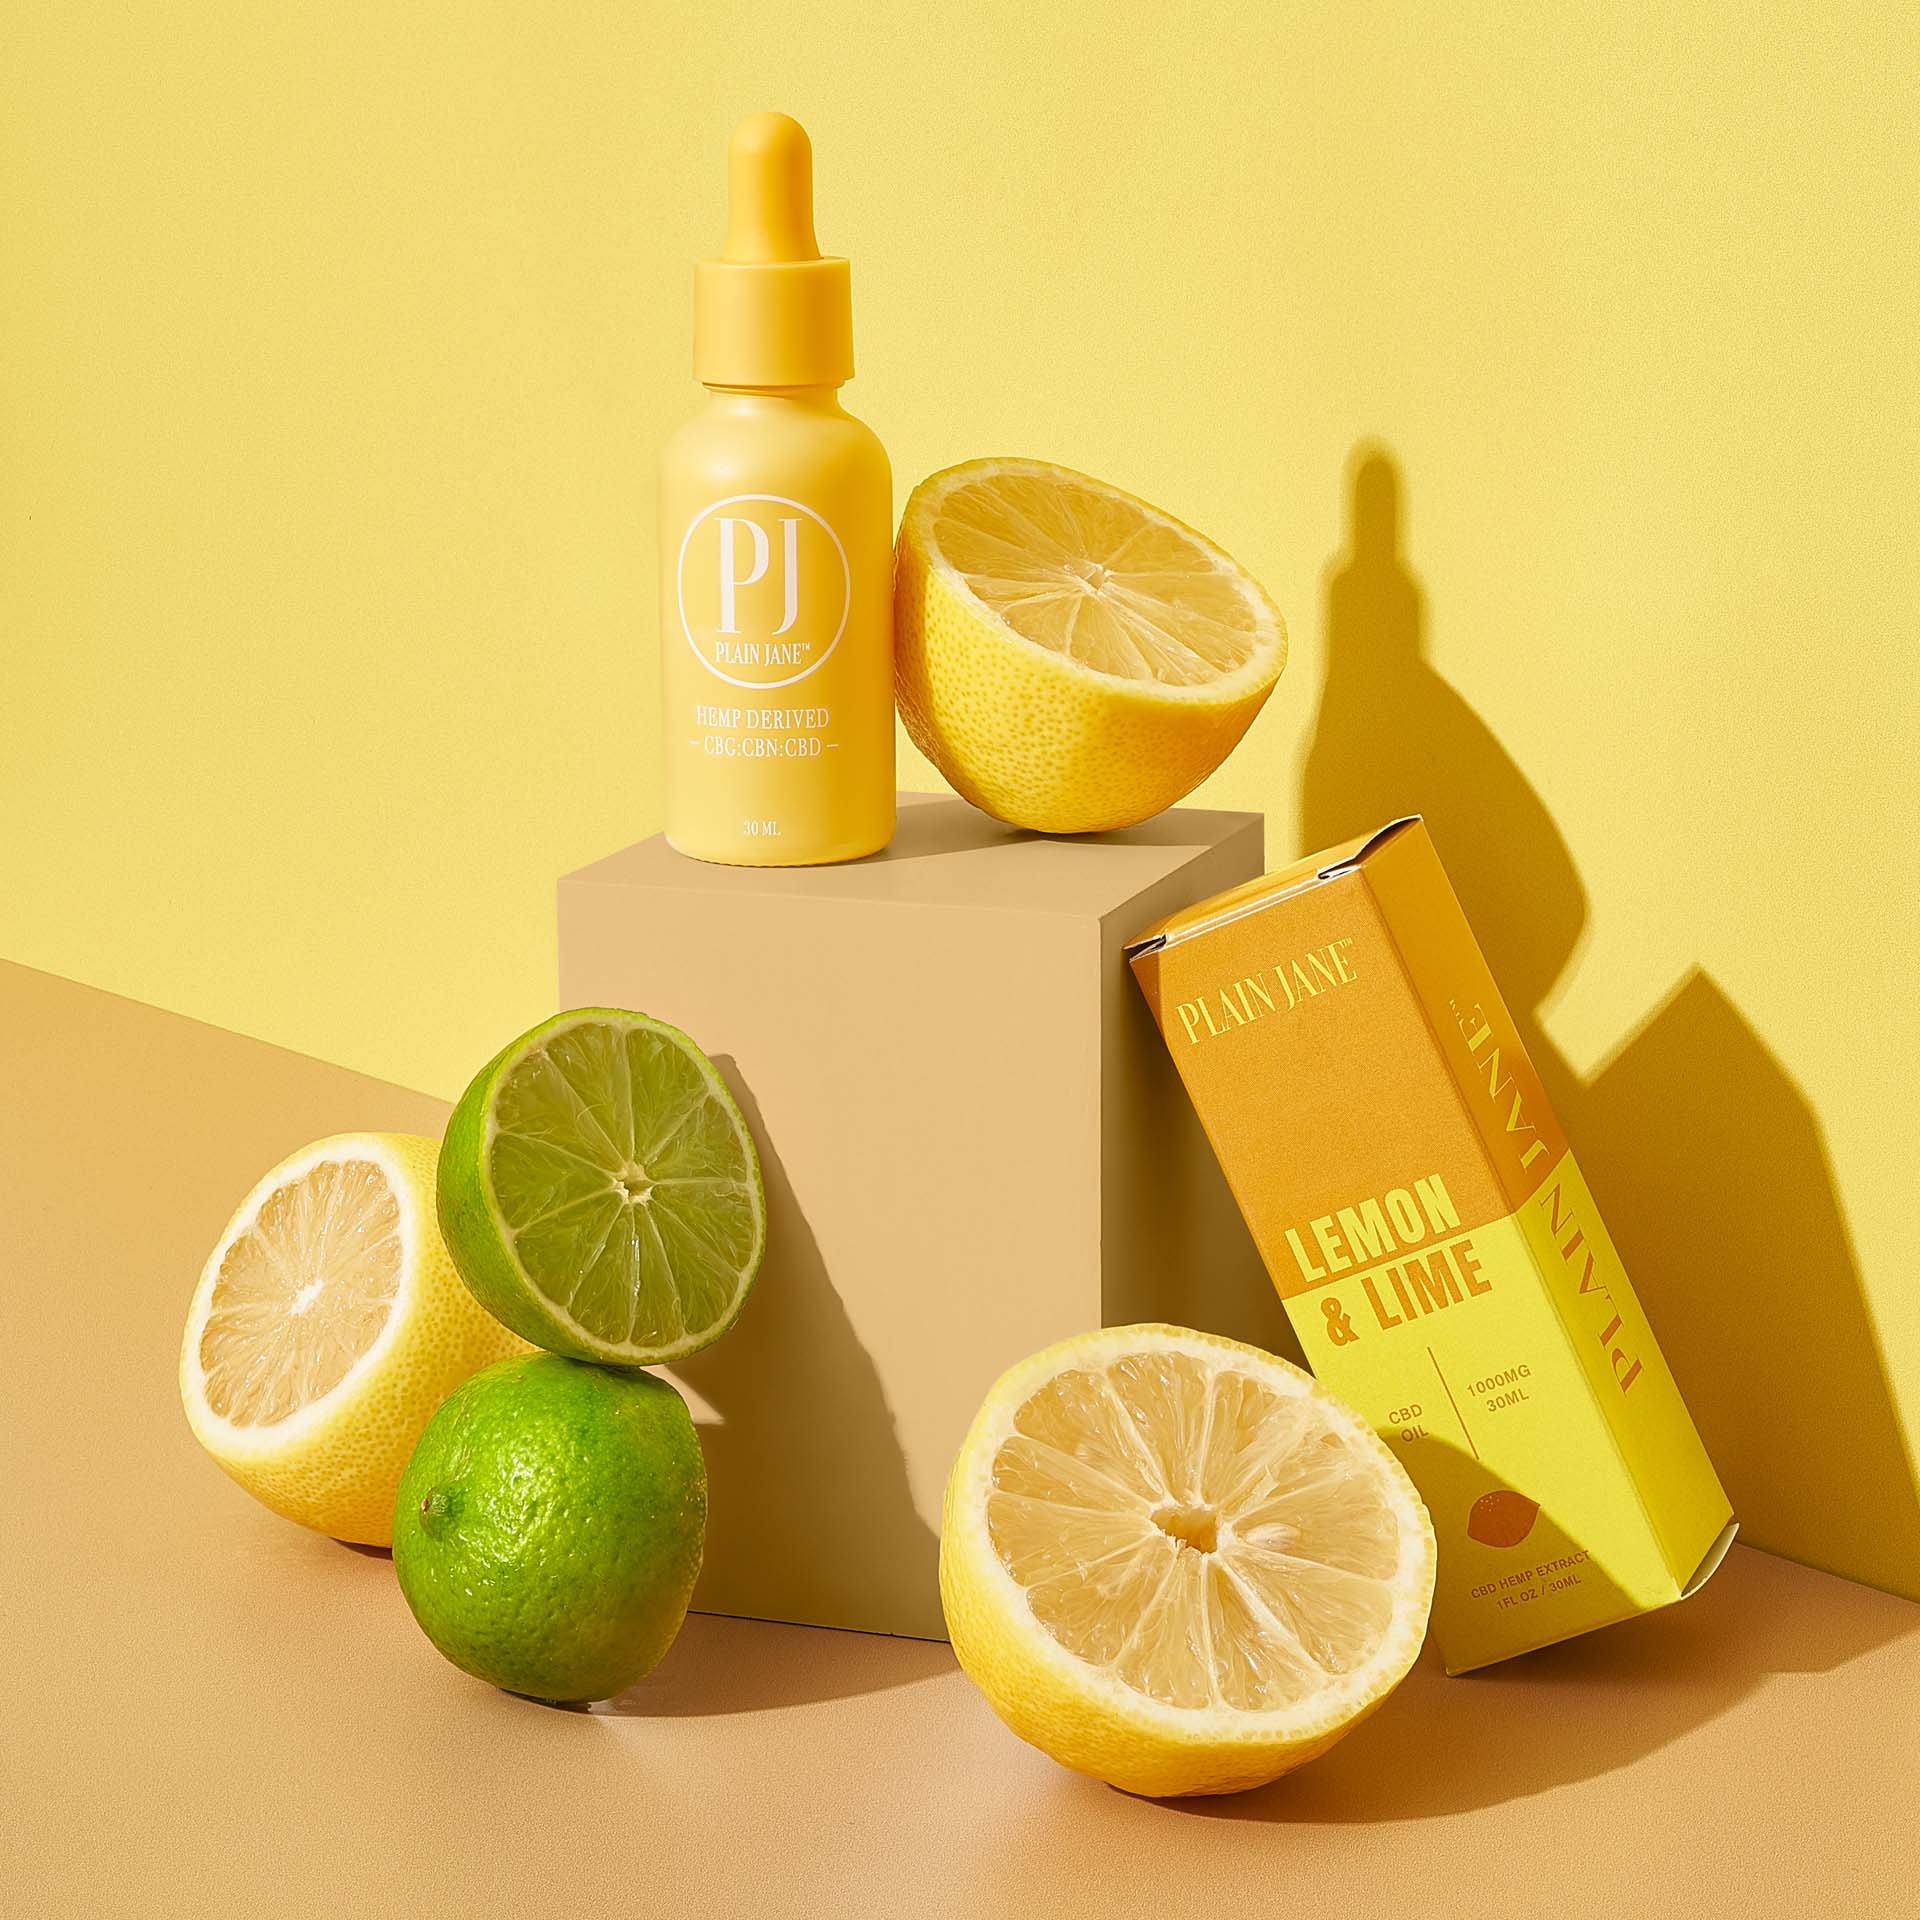 Plain Jane - Lemon & Lime CBD oil, photograph with yellow tincture bottle_.jpg